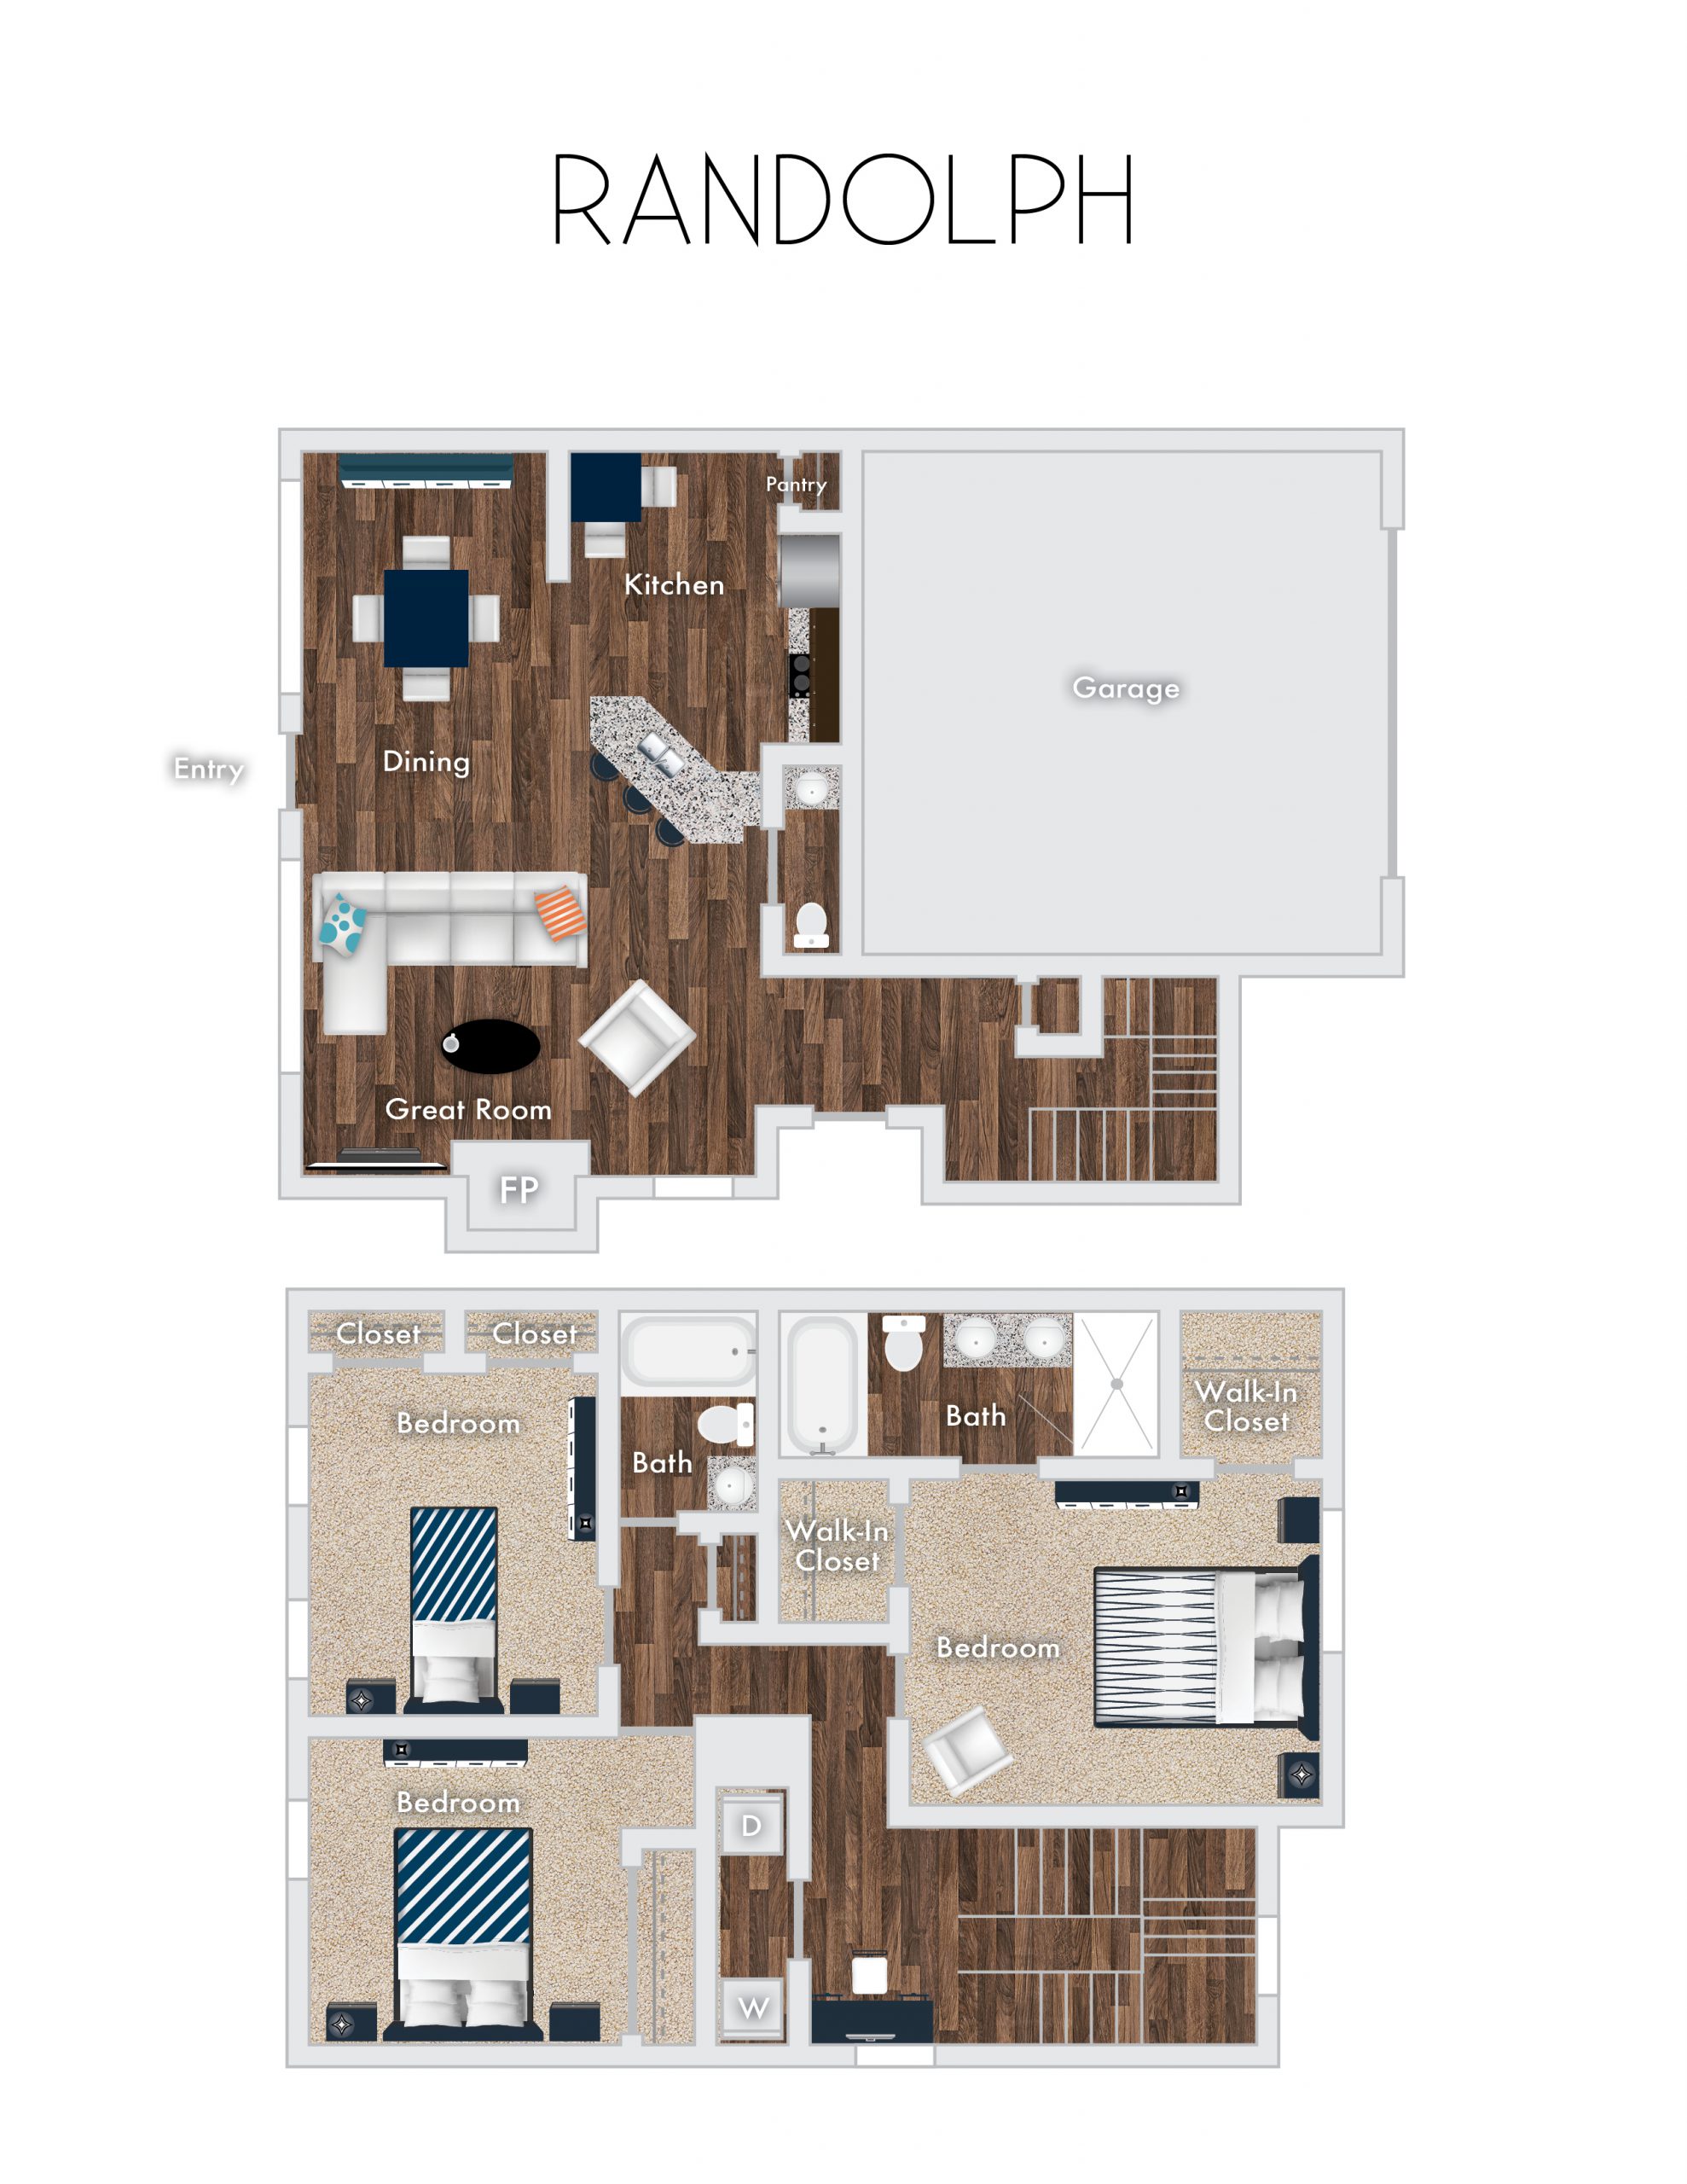 Randolph floor plan, 2 Story, 3 Bedrooms, 2 Baths, with 2 Car Garage